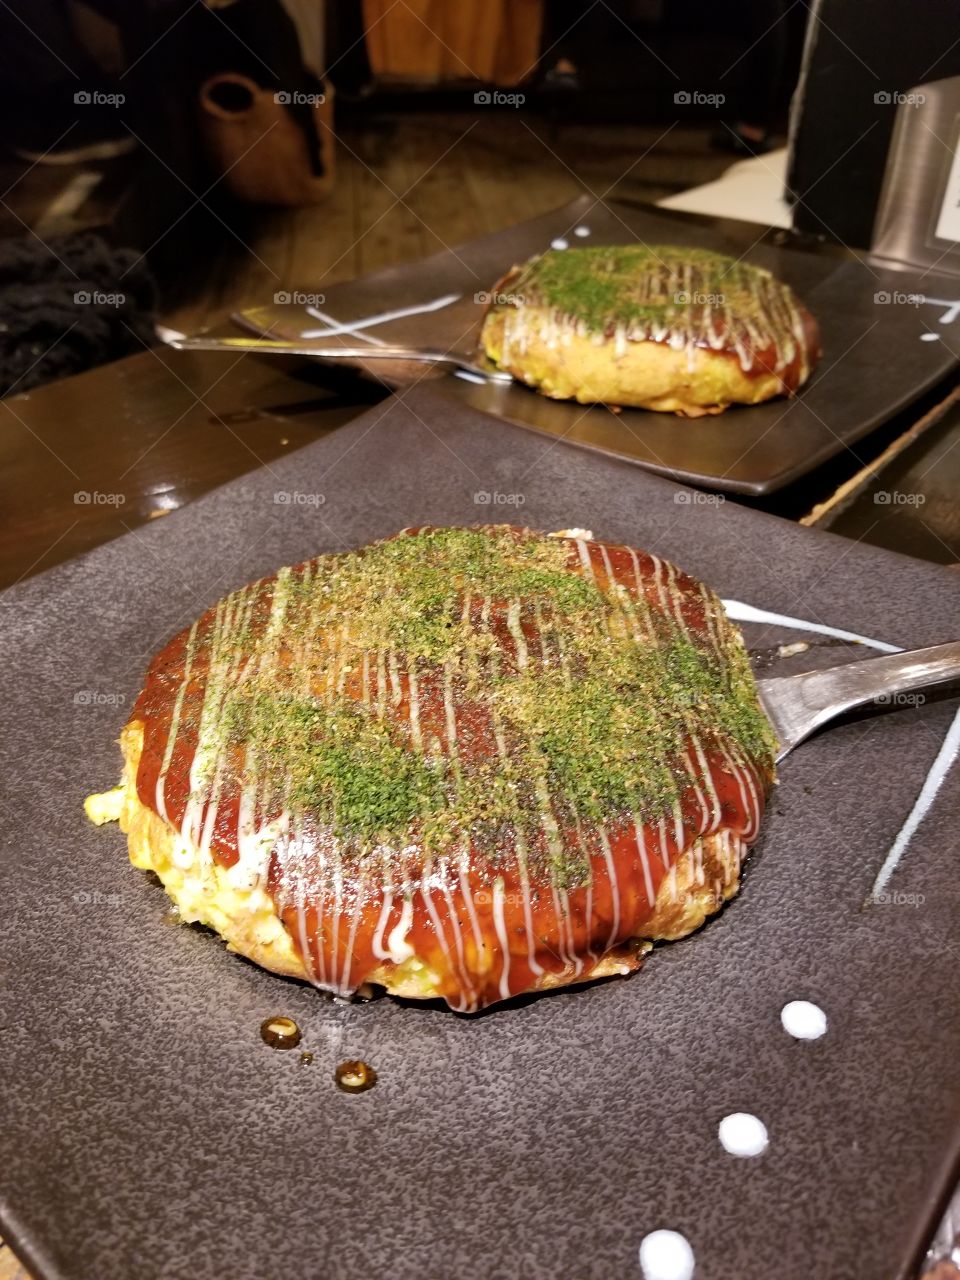 Kyoto style Okonomiyaki from TeppanManmaru. Large, savory, and reasonably priced.